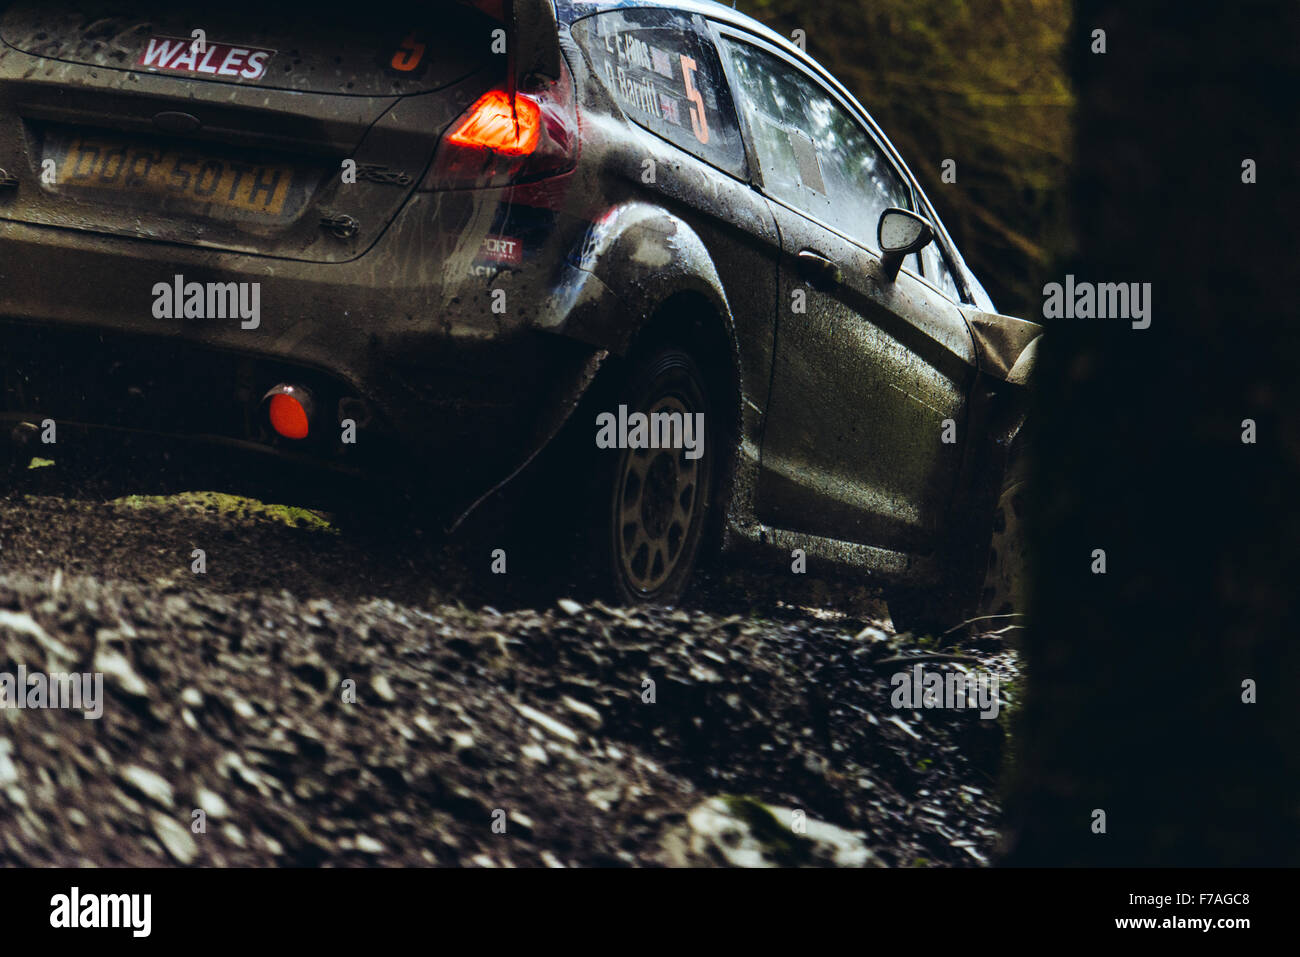 Ford Fiesta M-sport WRC car at Wales Rally GB 2015 Stock Photo